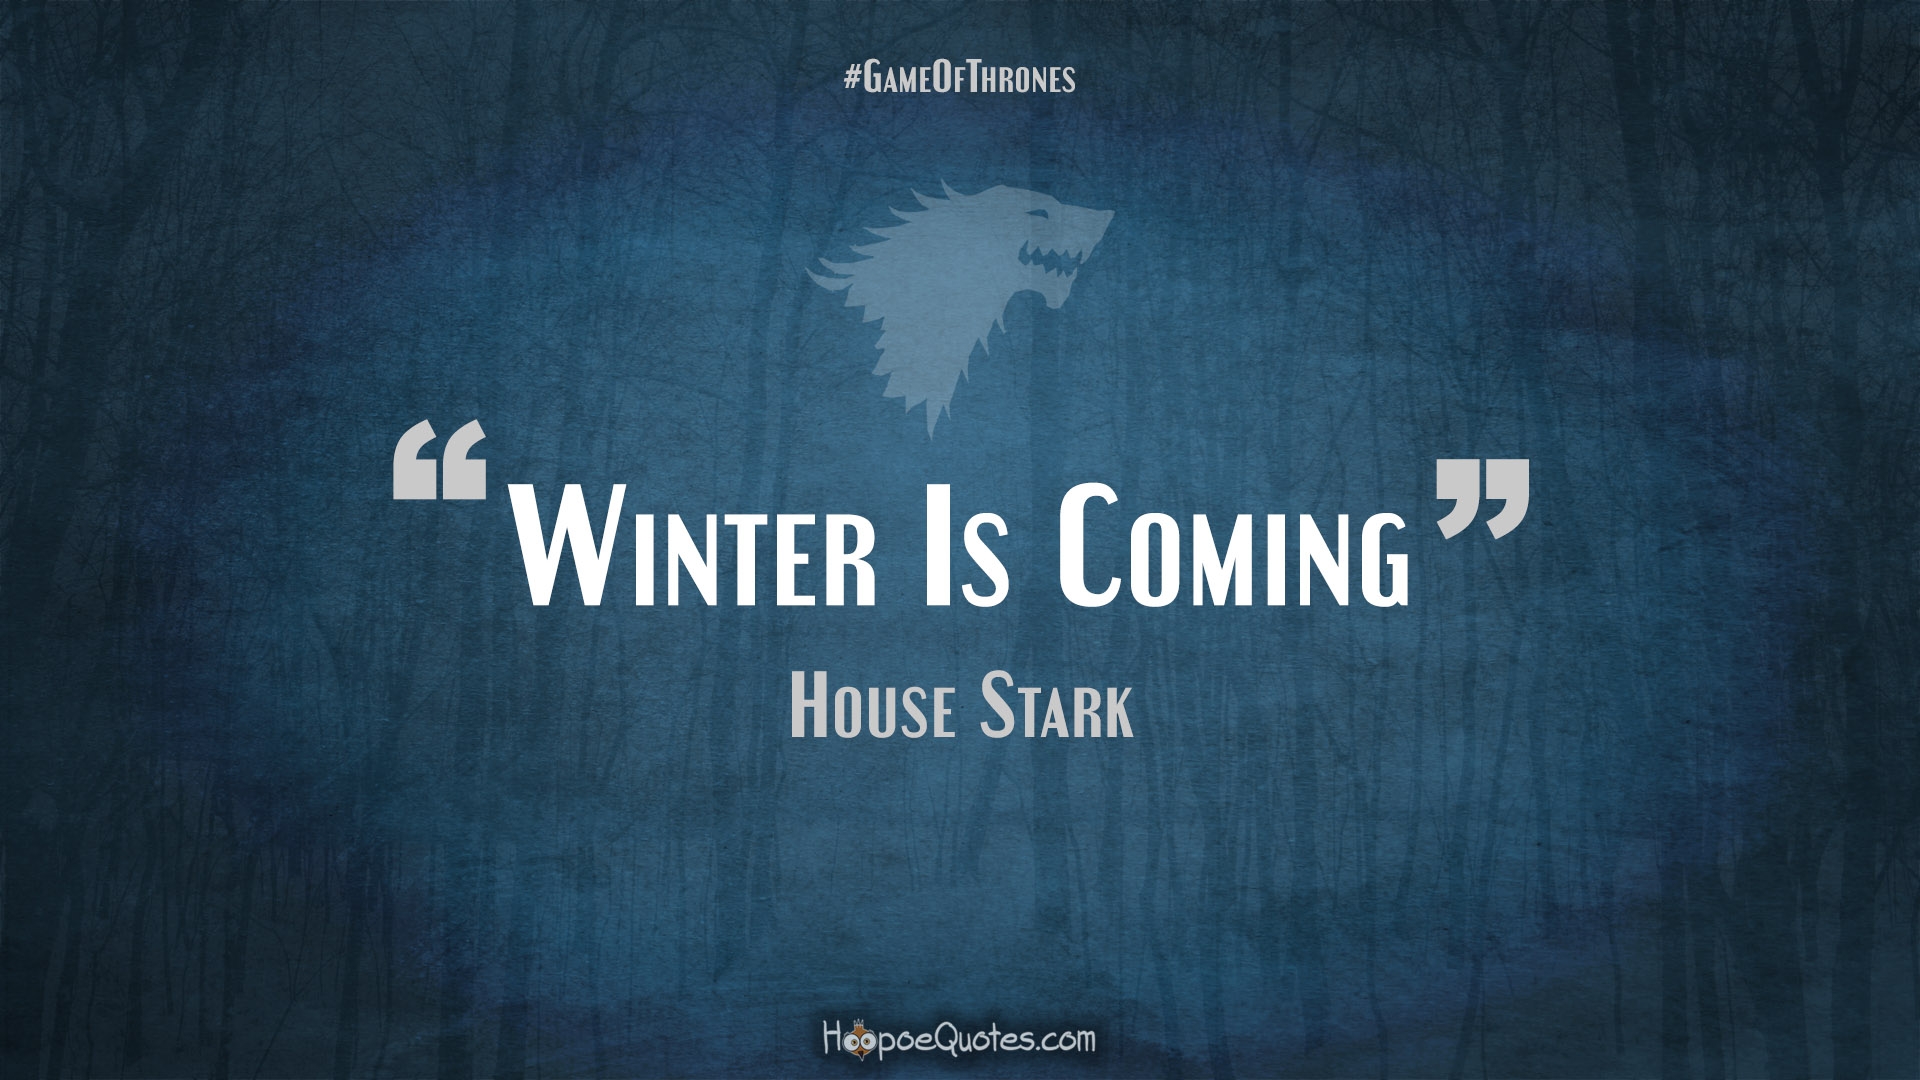 A Song Of Ice And Fire House Stark Ned Stark Bran Stark Sansa Stark Hodor Jon Snow Winter Is Coming  1920x1080